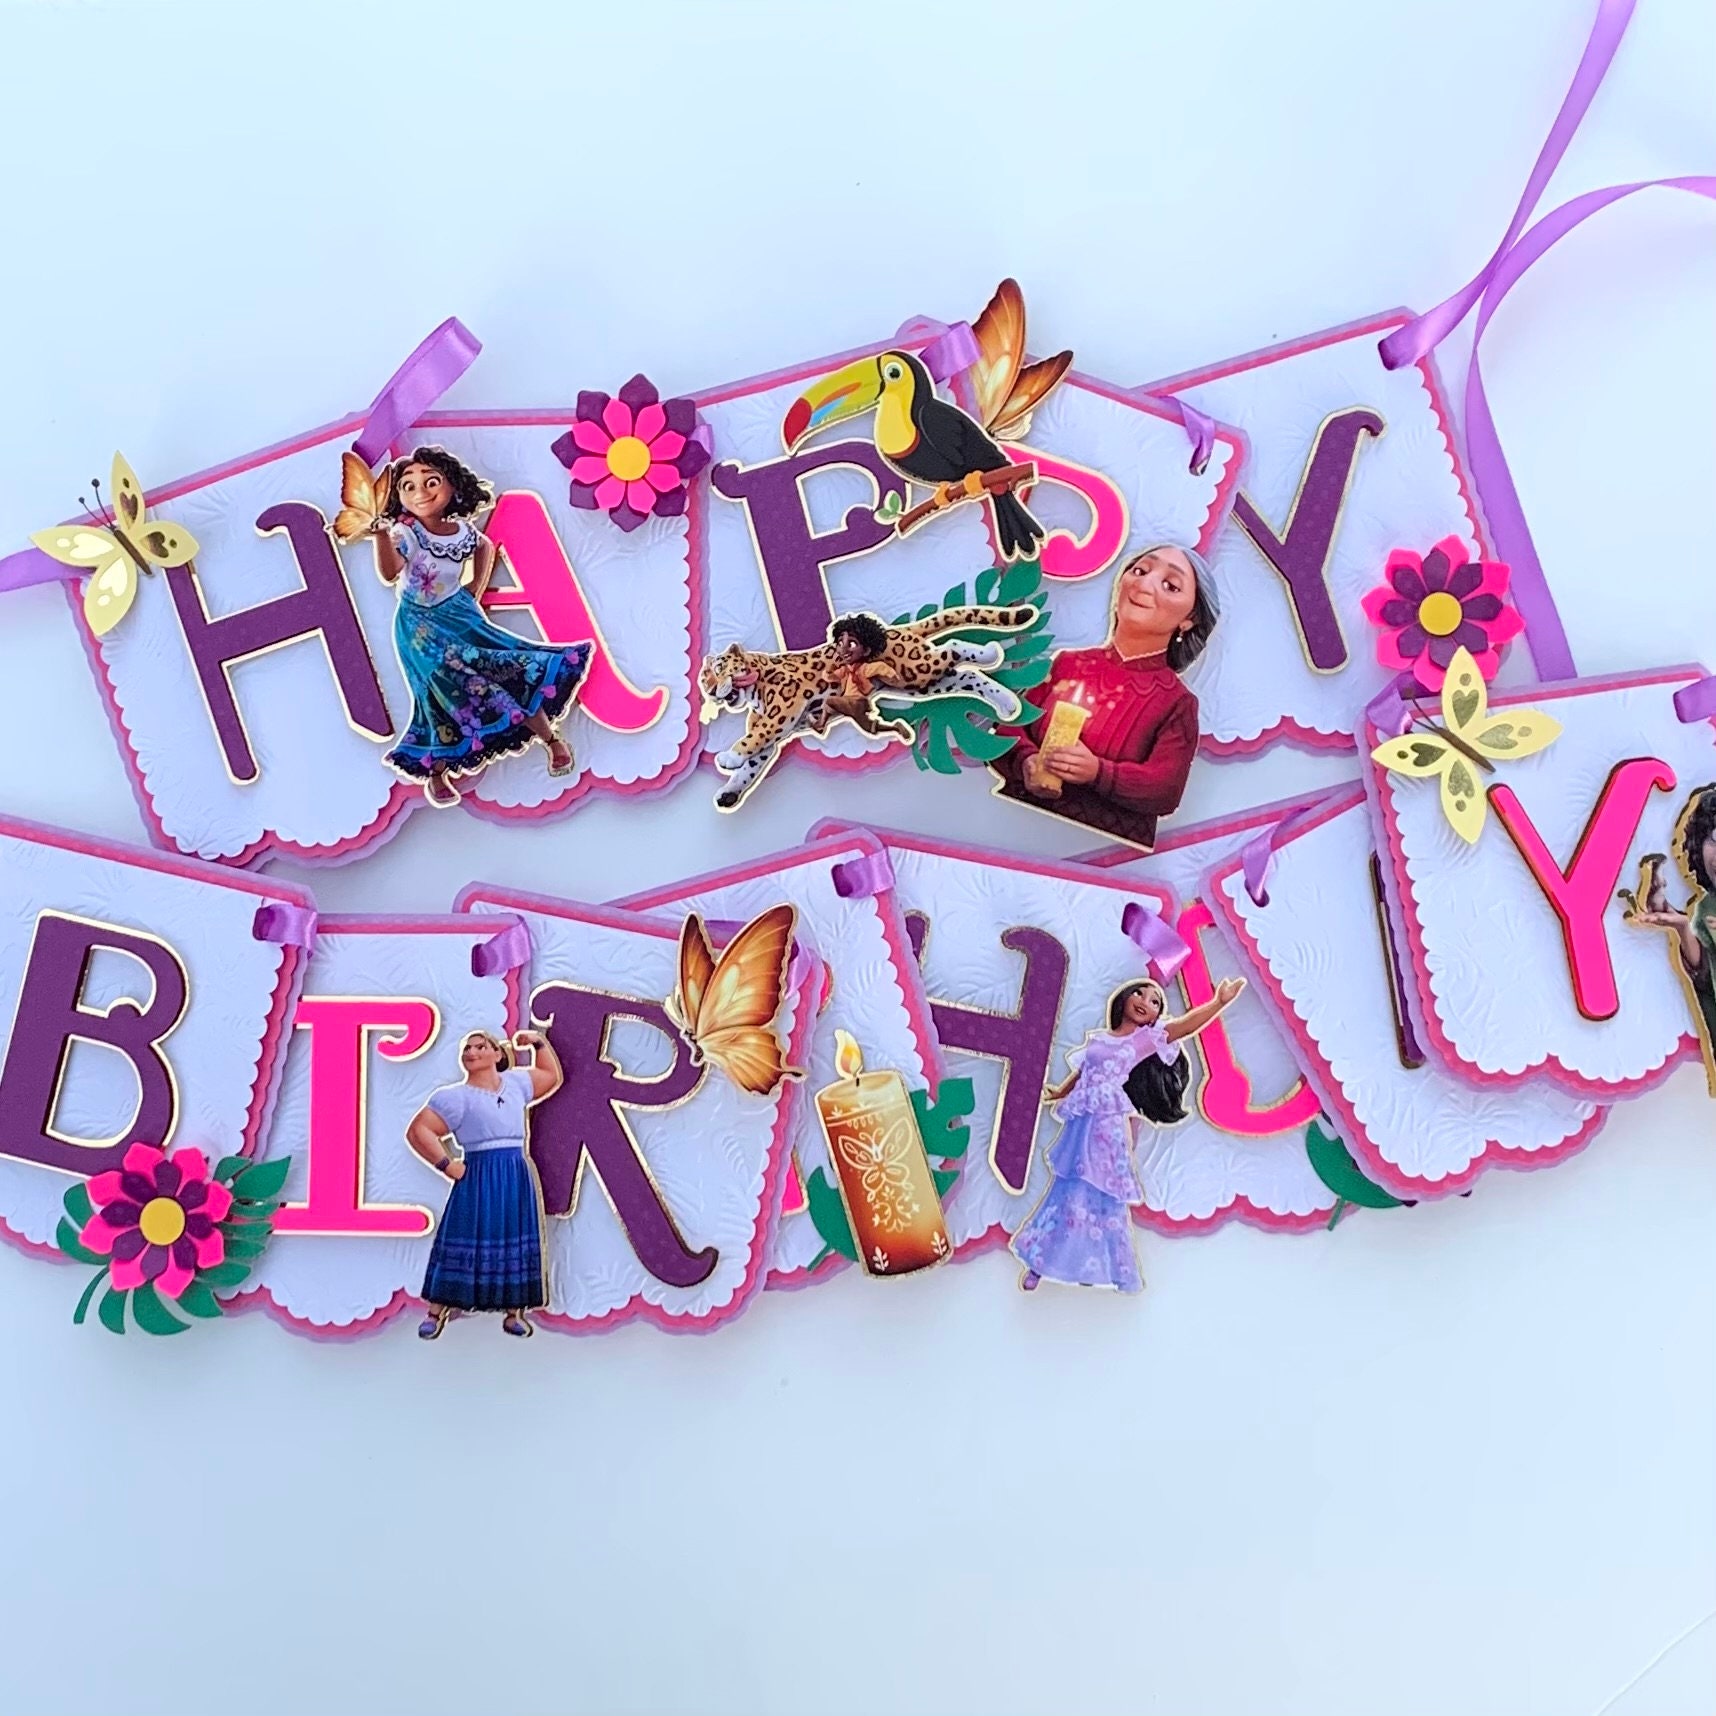 Disney Encanto Birthday Party Decoration w/ Large Backdrop & 150+ pcs items